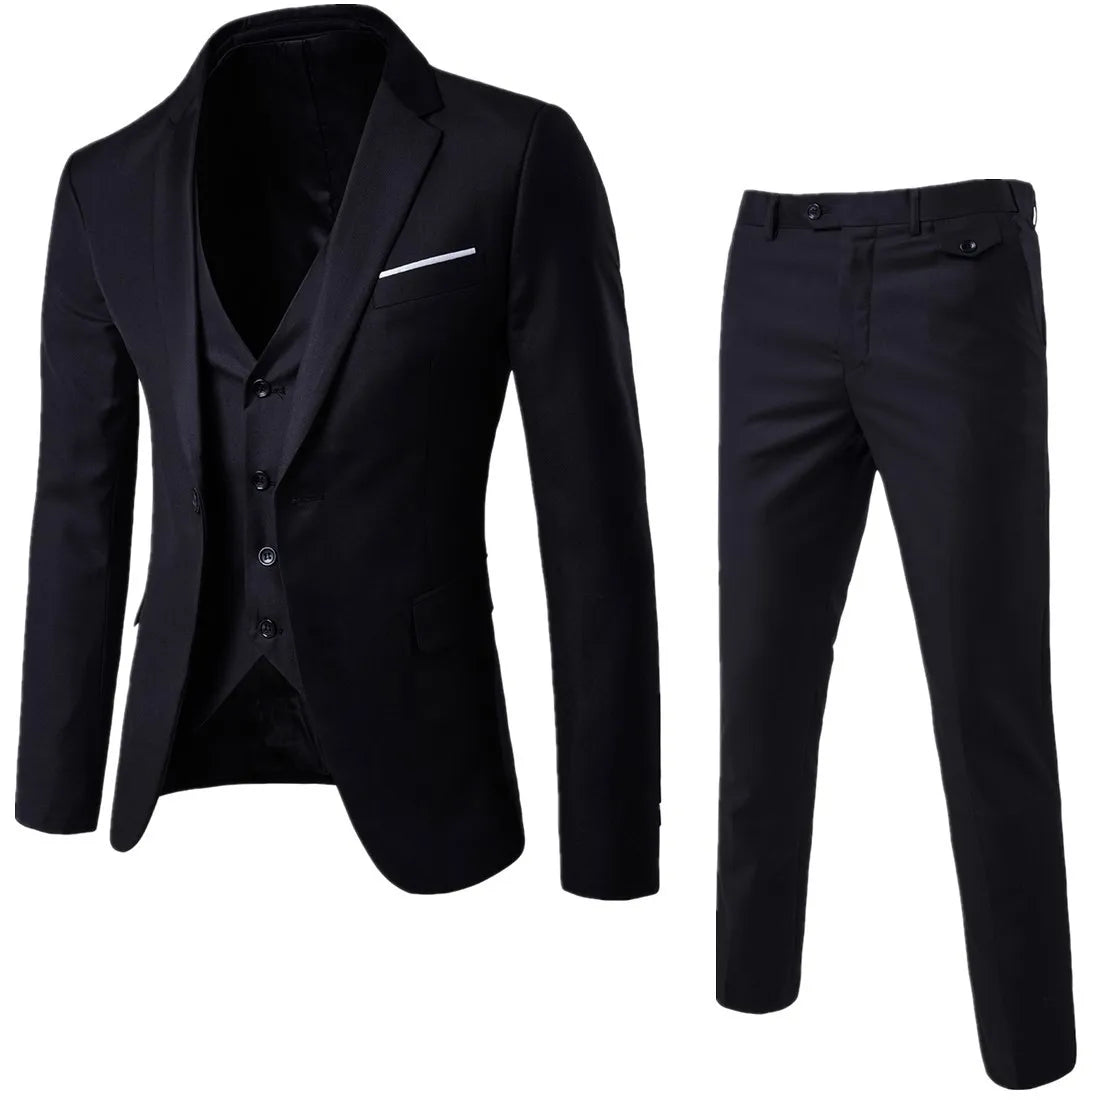 Leisure suit for men new four seasons business groom wedding dress formal fashion slim-fit two-piece suit for men